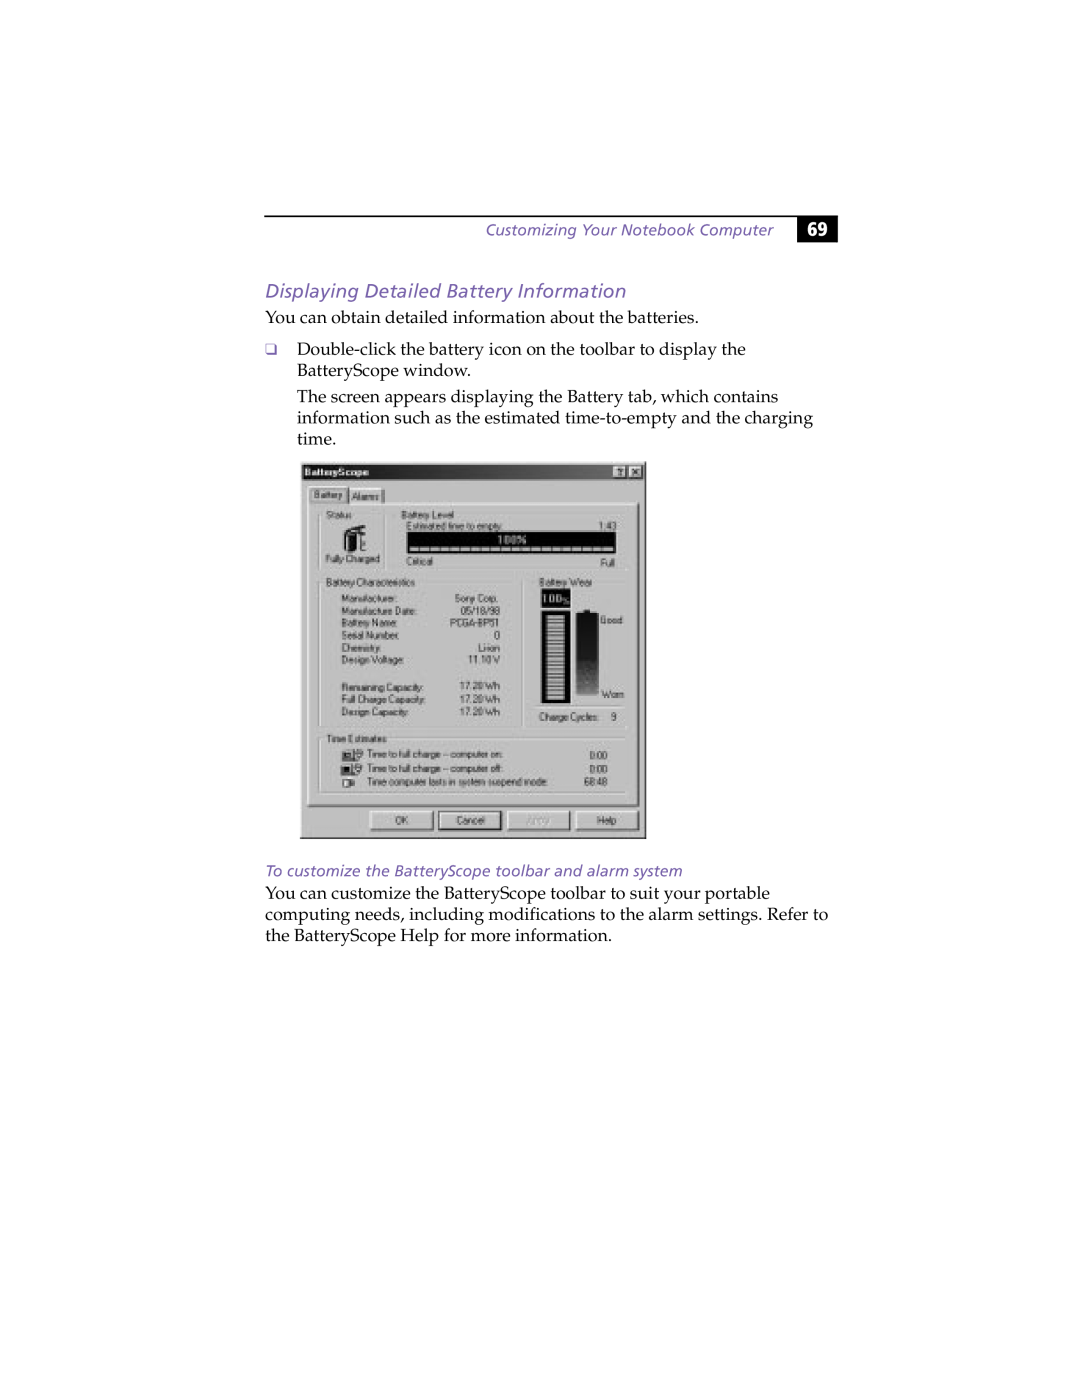 Sony PCG505FX manual Tosystem, DisplayingDetailedBatteryCustomizingInformationYourNotebookComputer 